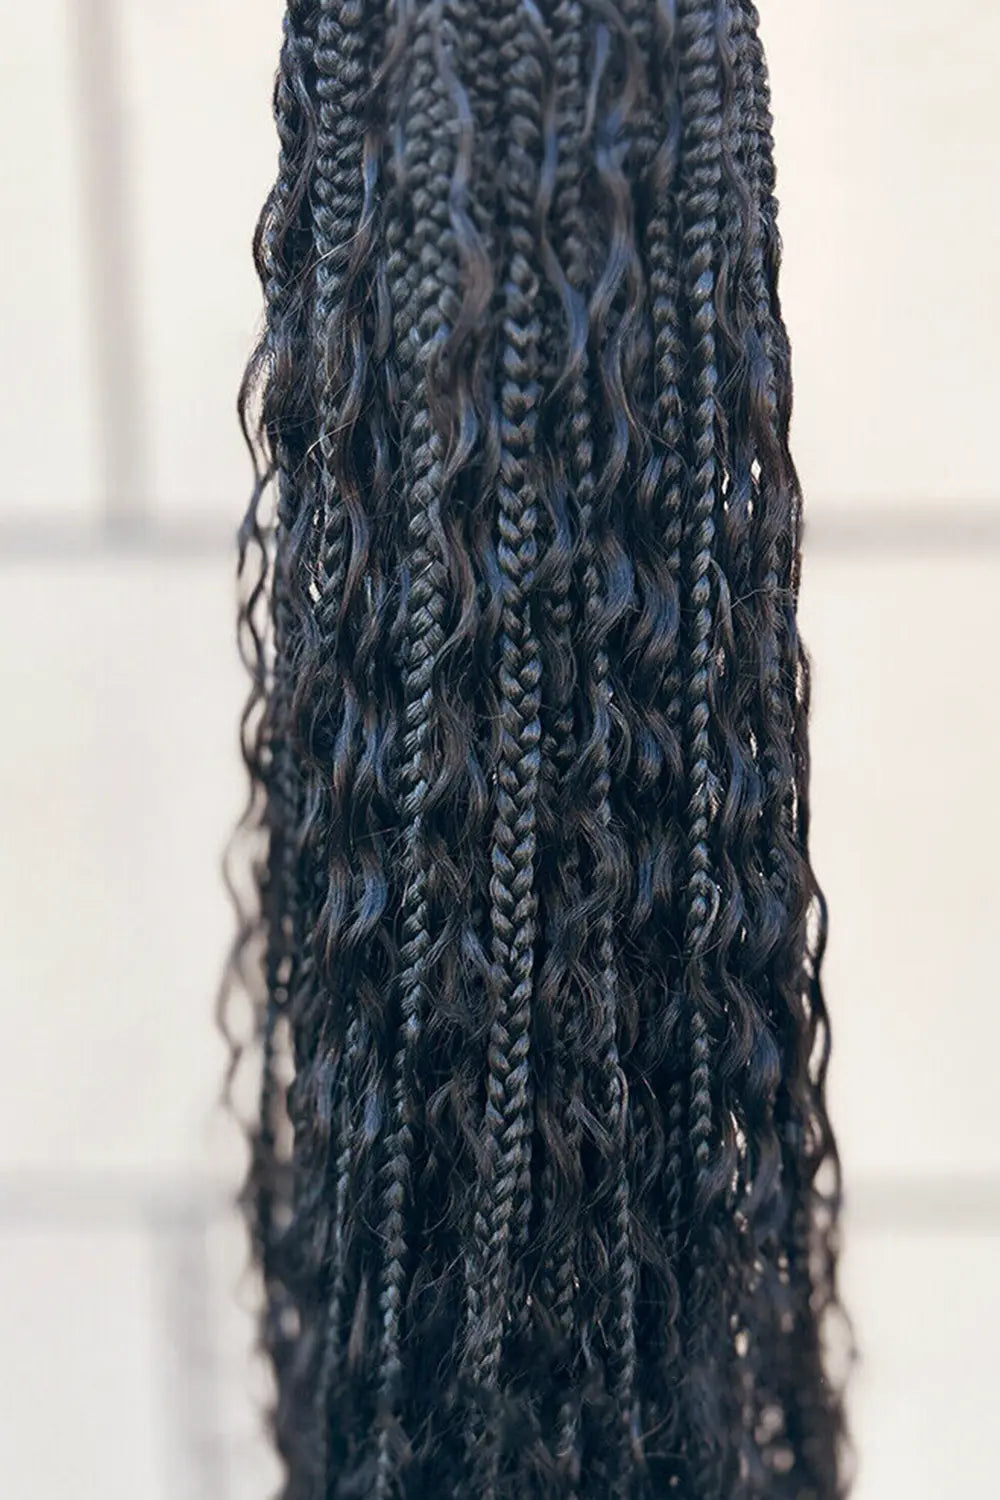 Boho Crochet Box Braids with Human Hair Curls Pre-Looped Deep Wave 20  Strands